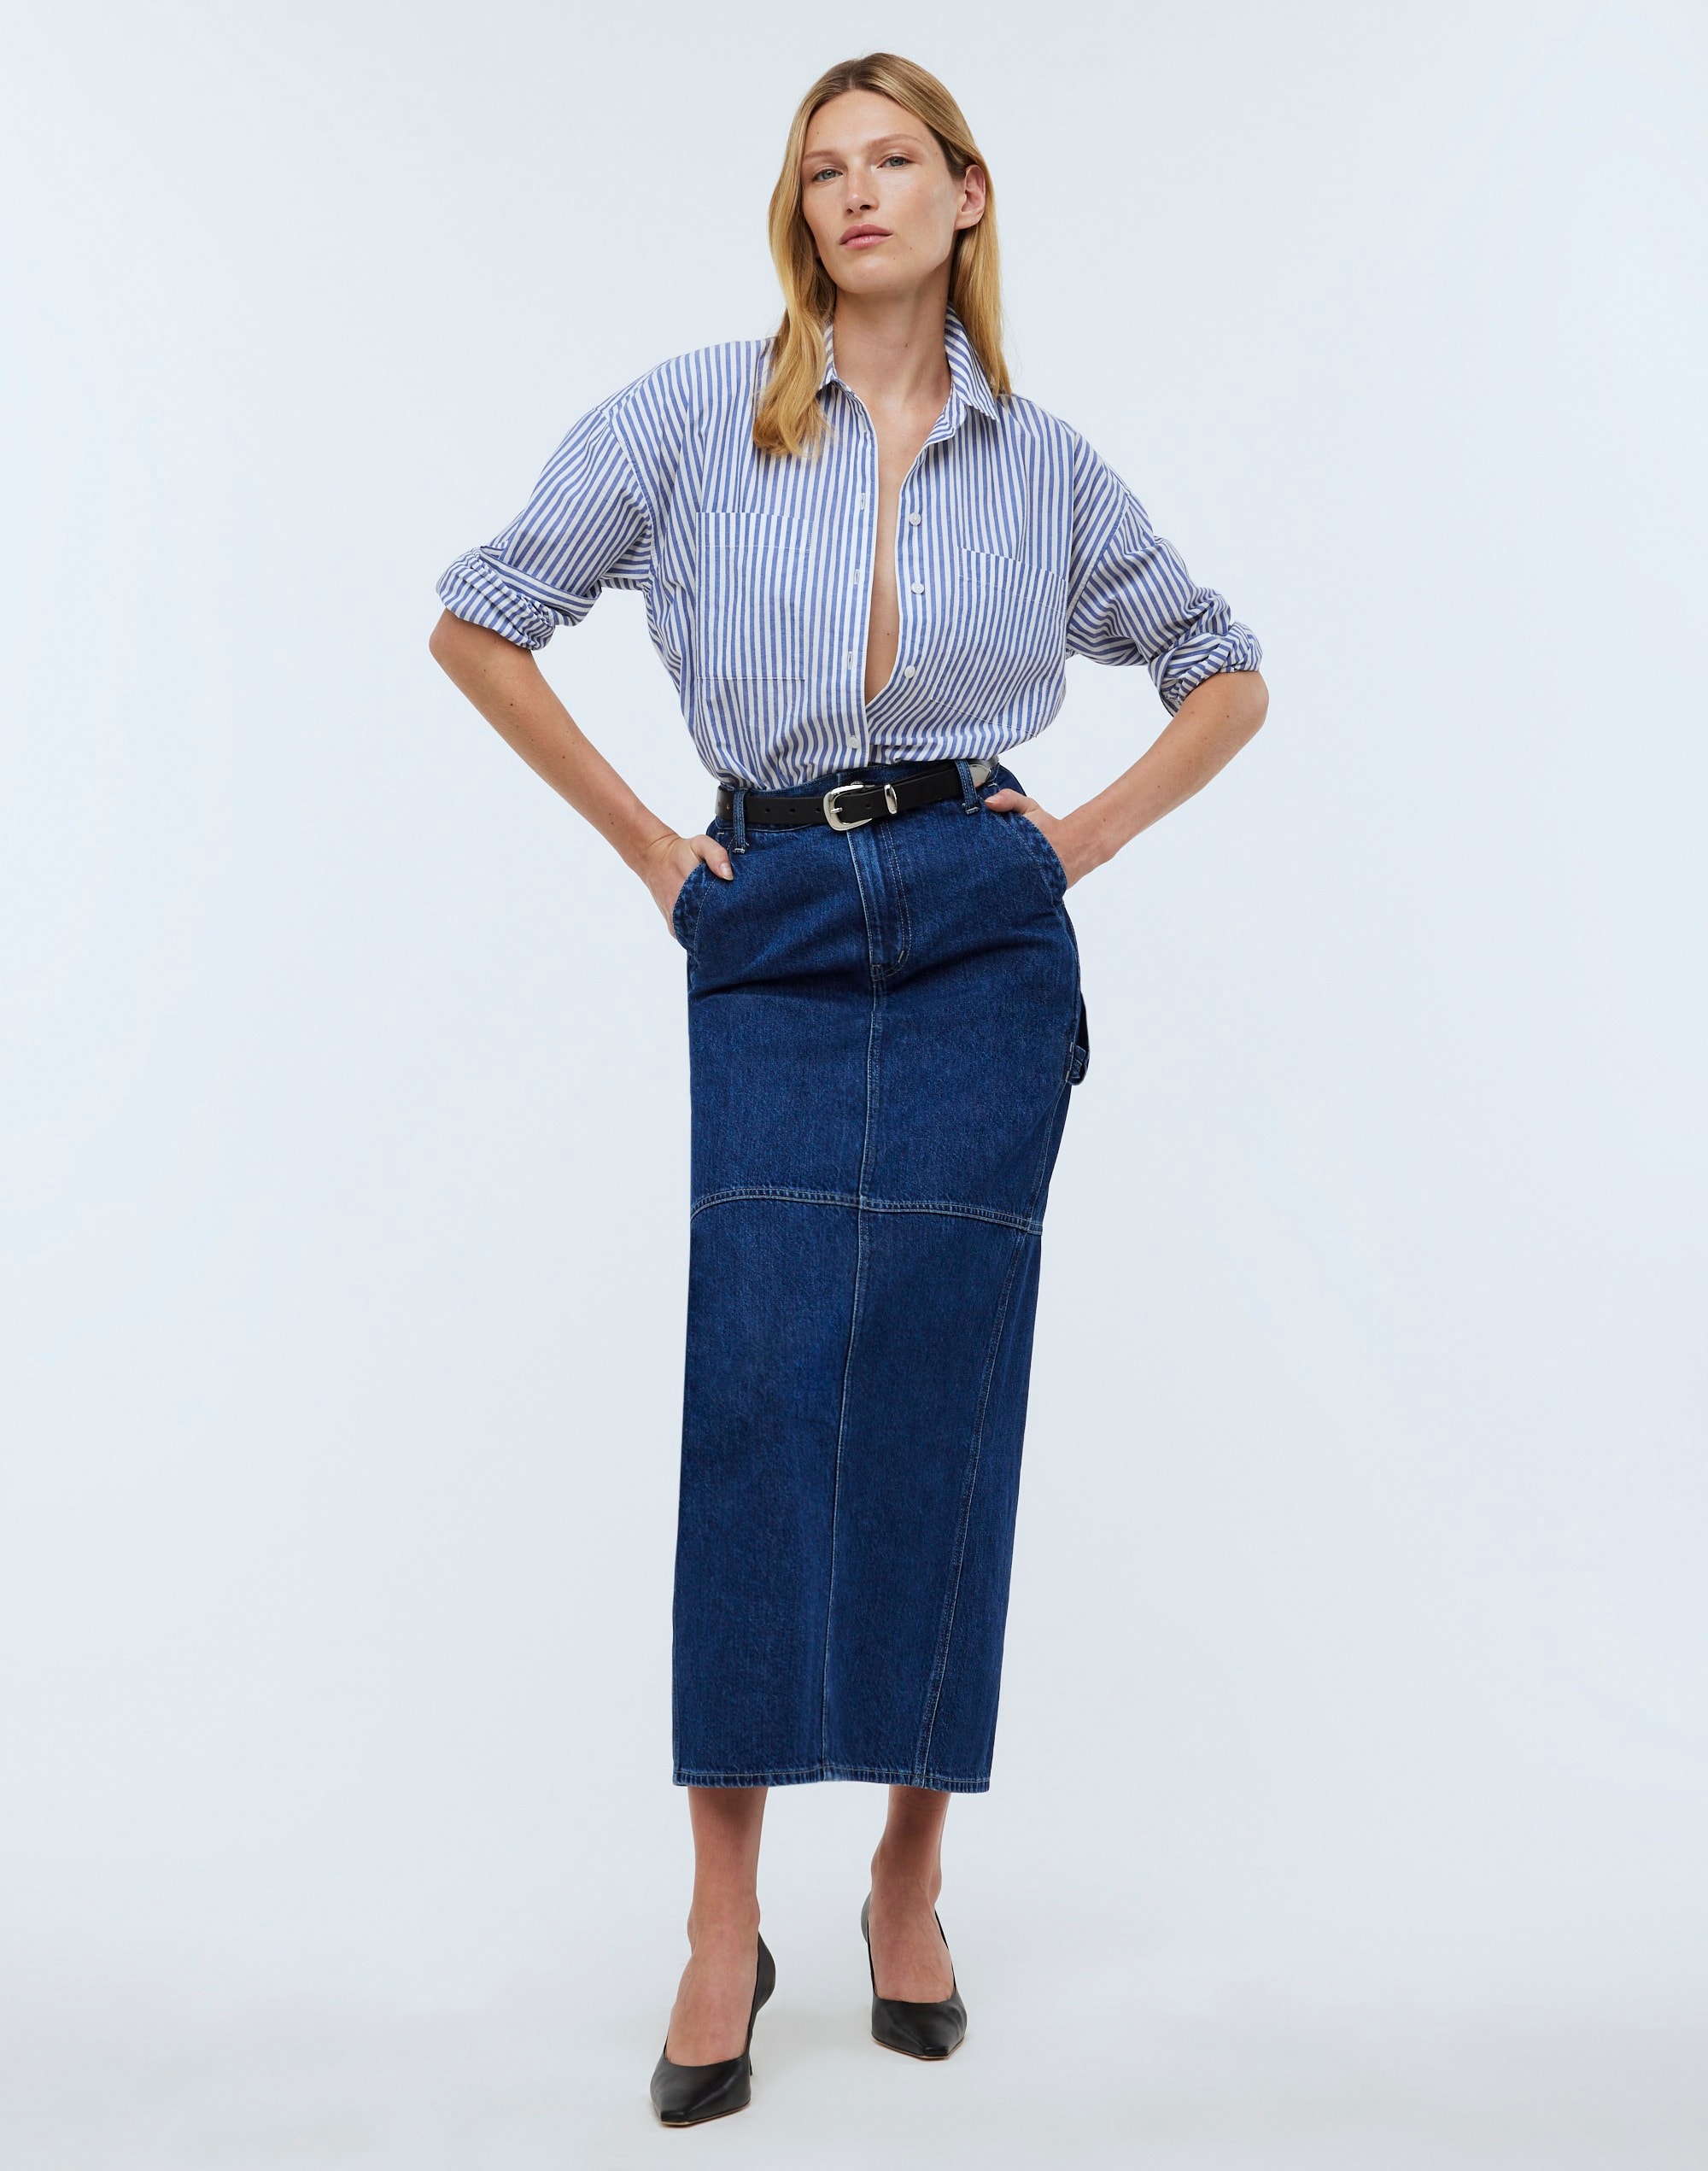 Denim Carpenter Maxi Skirt in Handlon Wash | Madewell